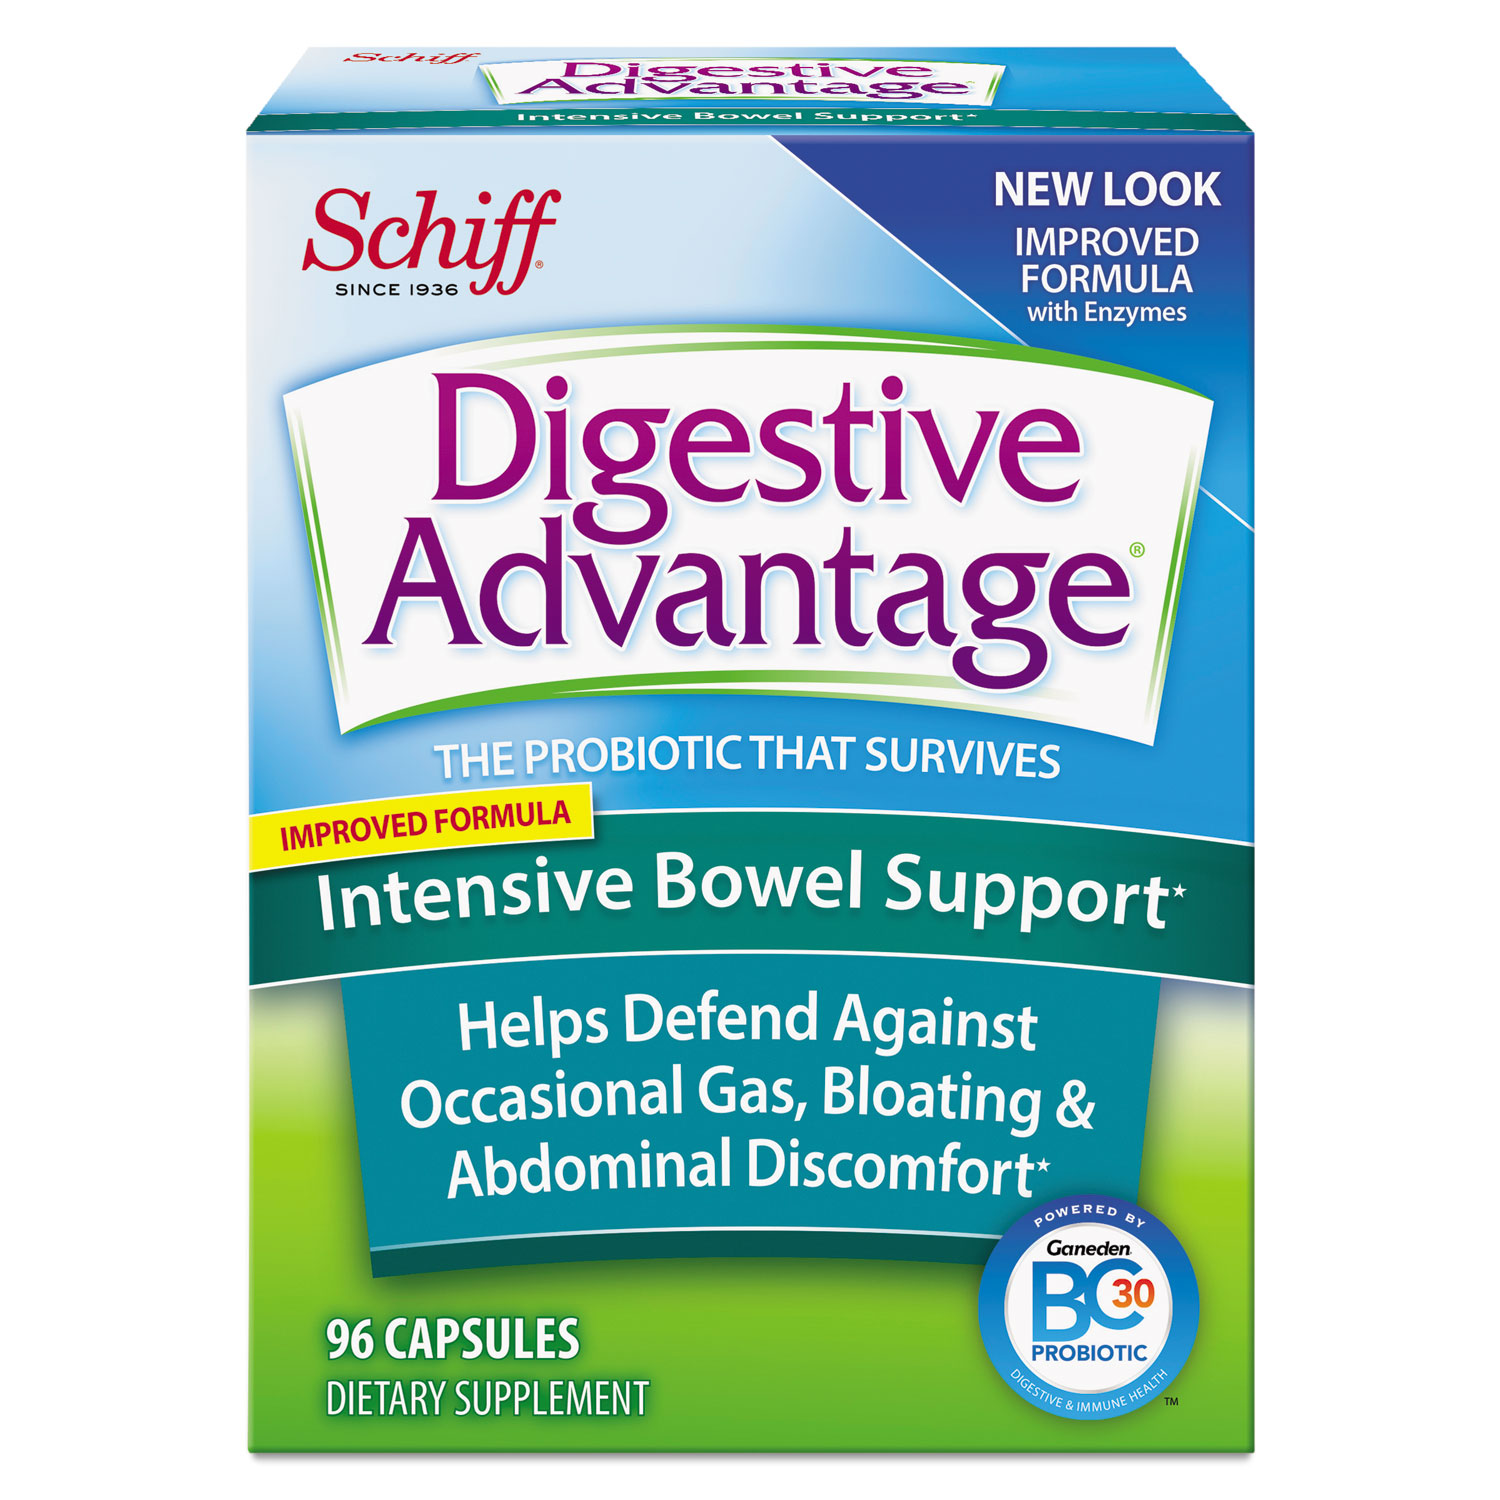  Digestive Advantage 15066-00117 Probiotic Intensive Bowel Support Capsule, 96 Count, 36/Carton (DVA00117DA) 